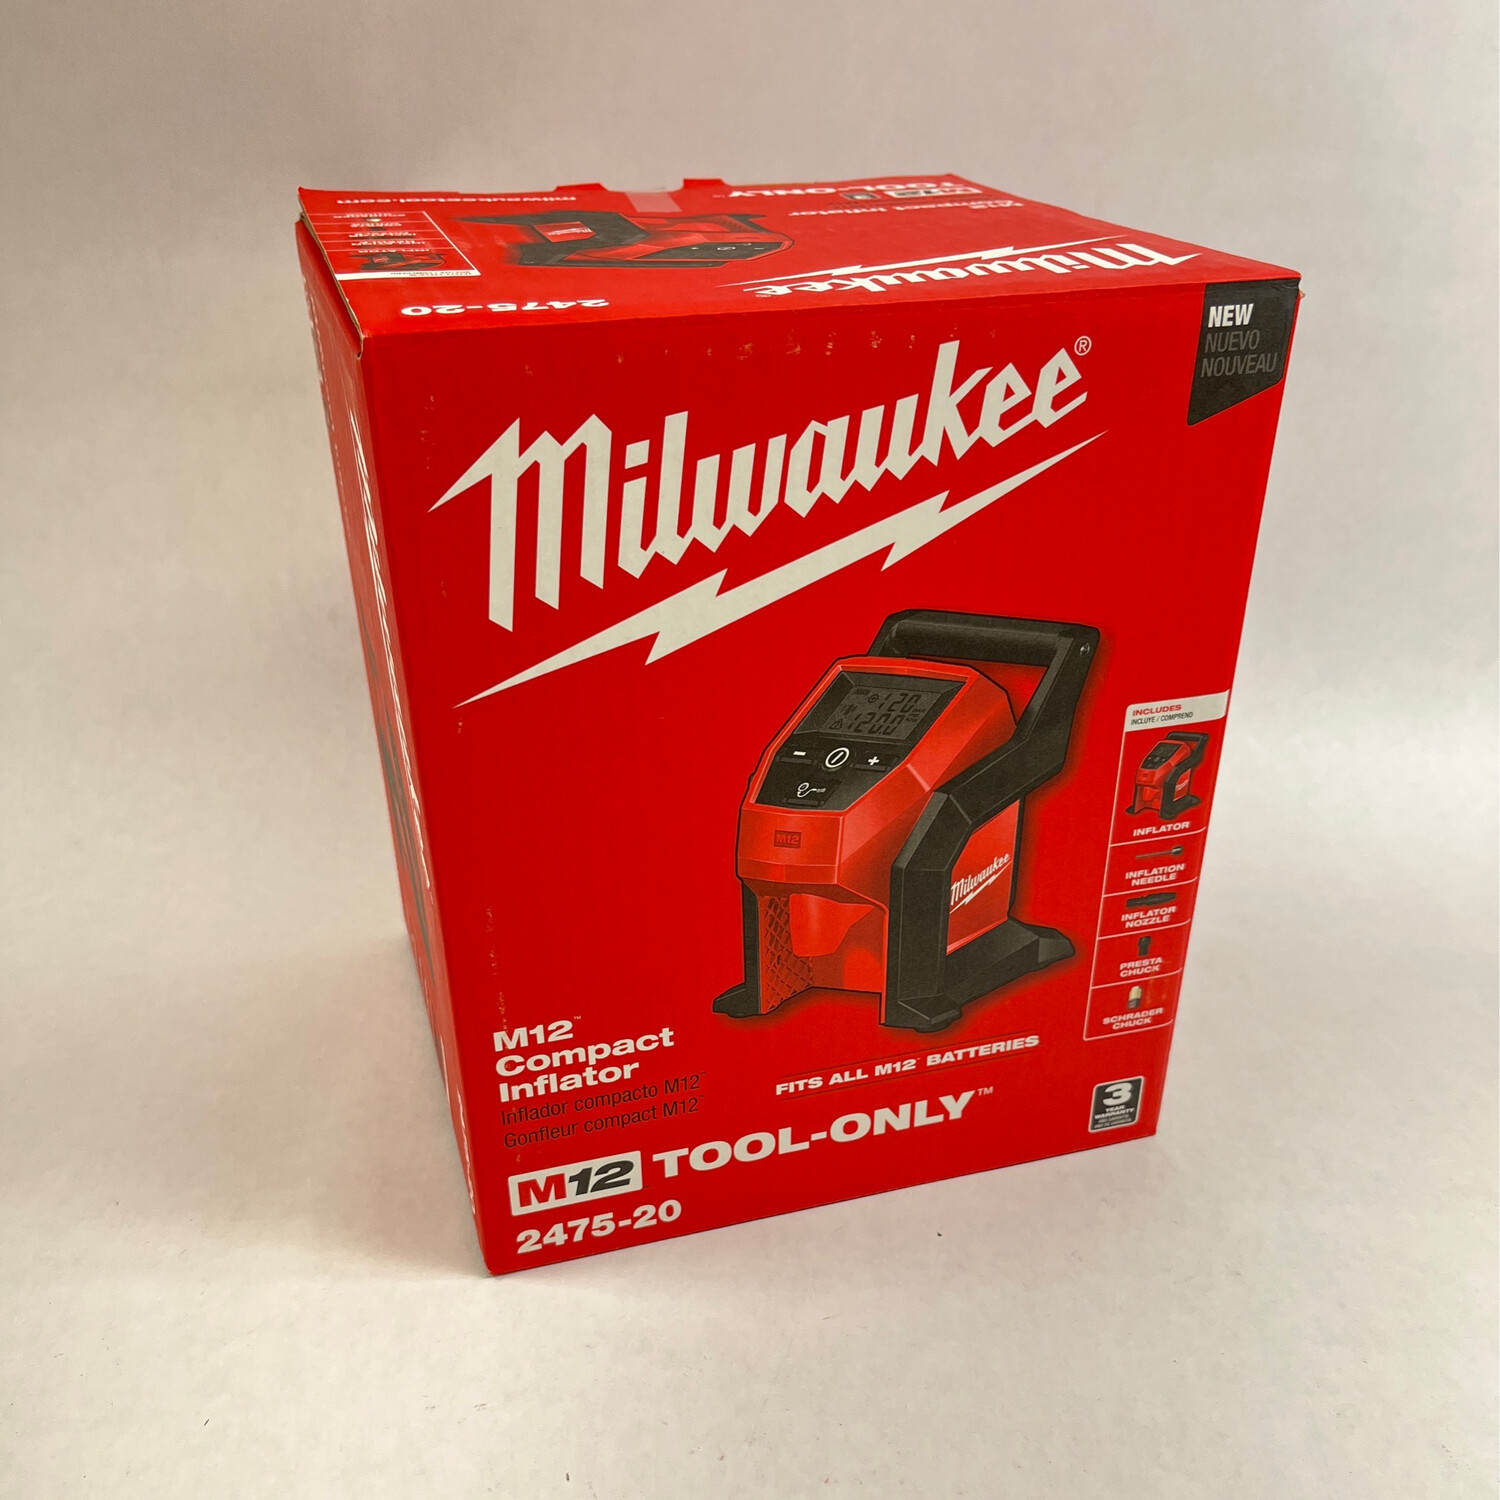 Milwaukee M12 Compact Inflator, 2475-20